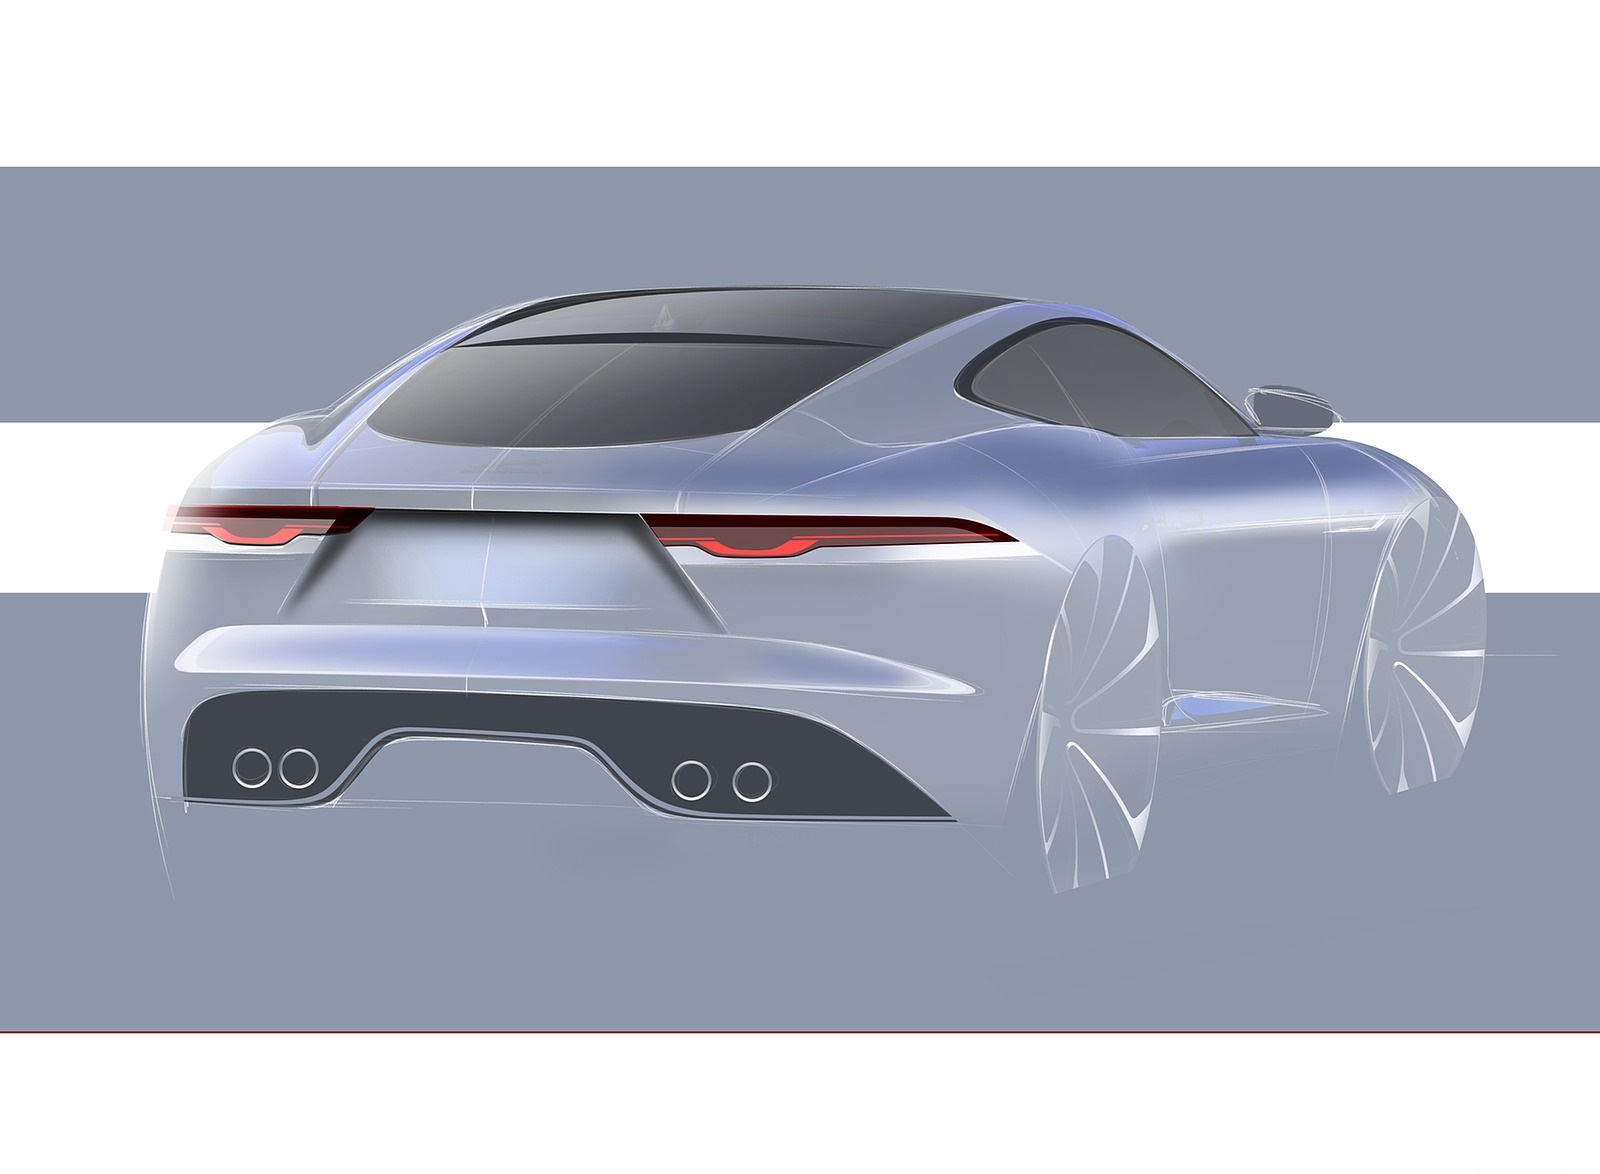 2021 Jaguar F-TYPE Design Sketch Wallpapers #141 of 143